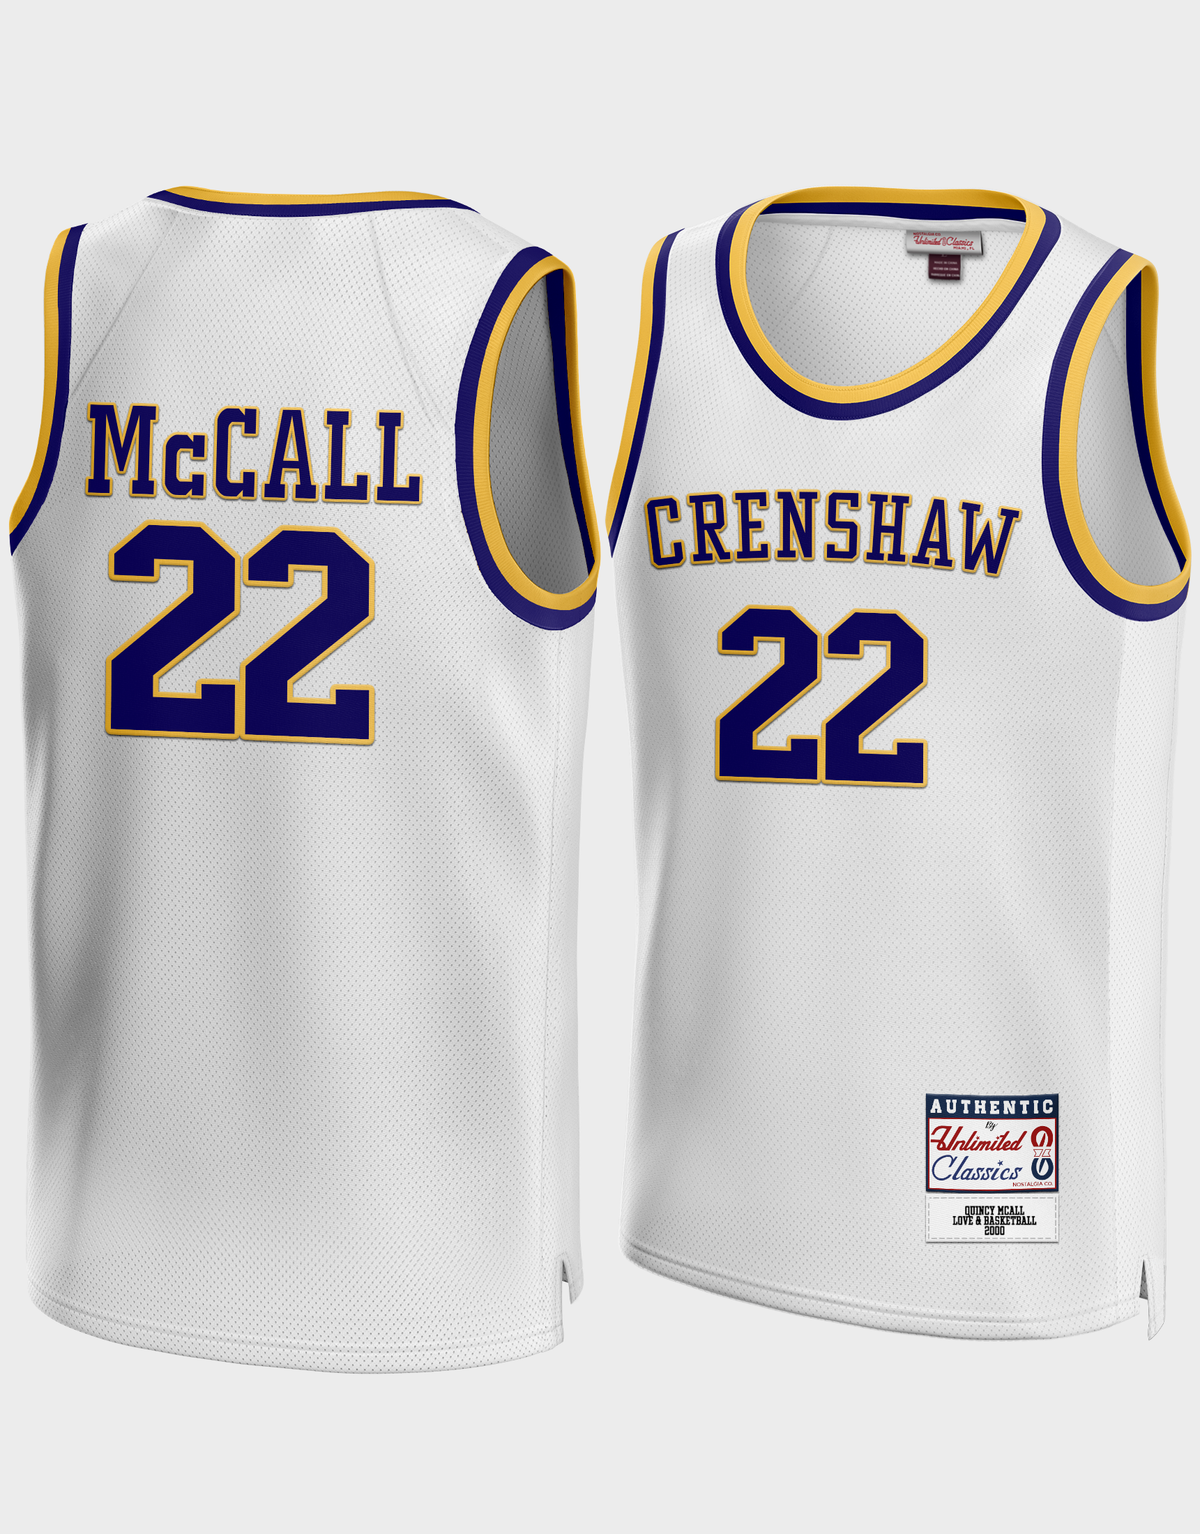 Quincy McCall #22 Love & Basketball Crenshaw Jersey